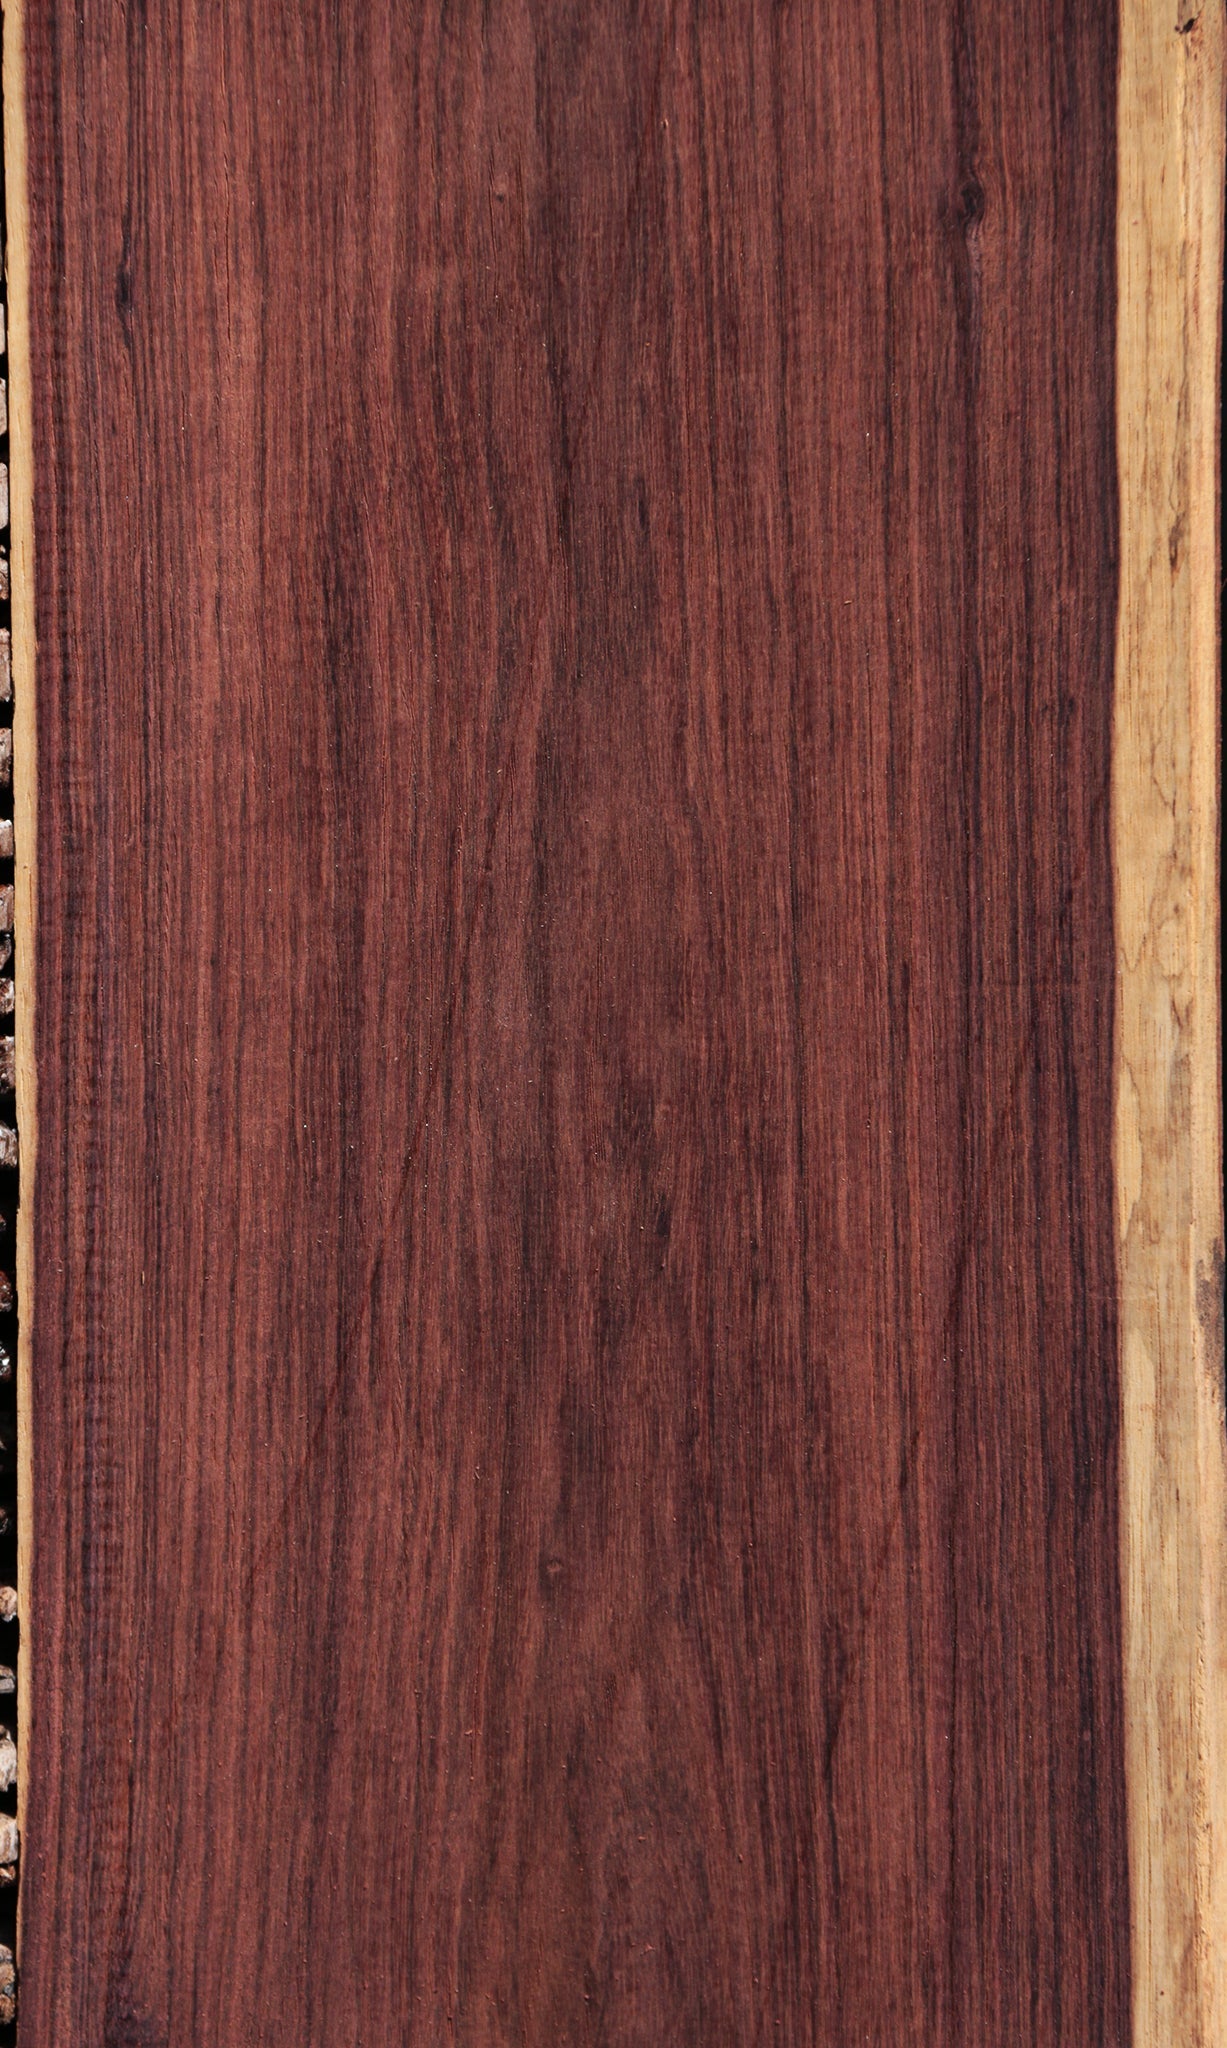 Madagascar Rosewood Instrument Lumber